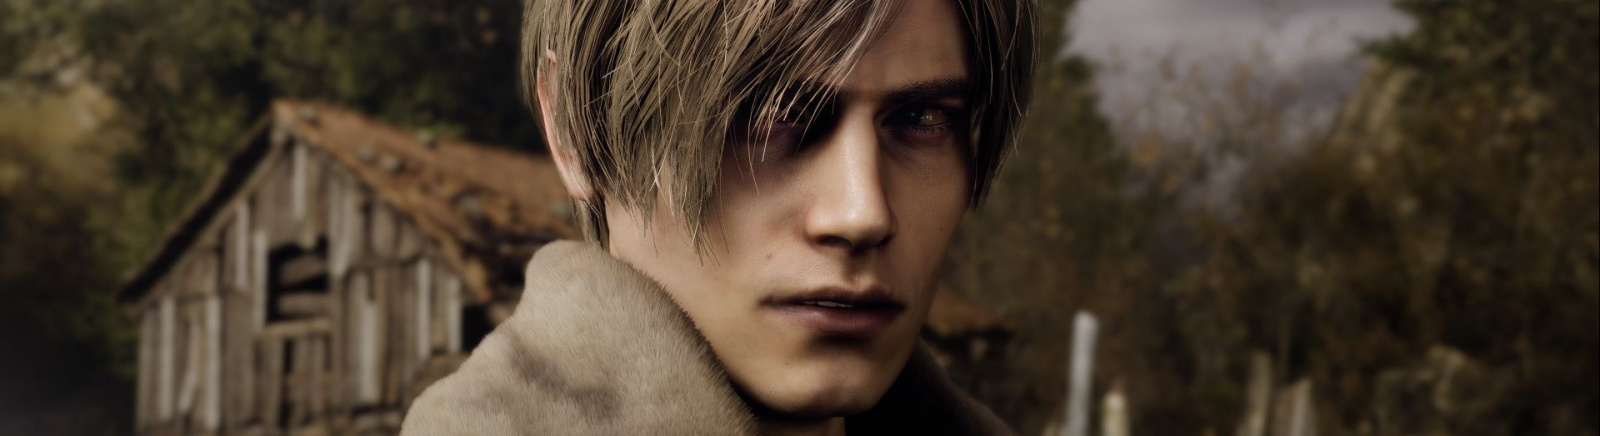 Дата выхода Resident Evil 4 Remake (2023)  на PC, PS5 и Xbox Series X/S в России и во всем мире